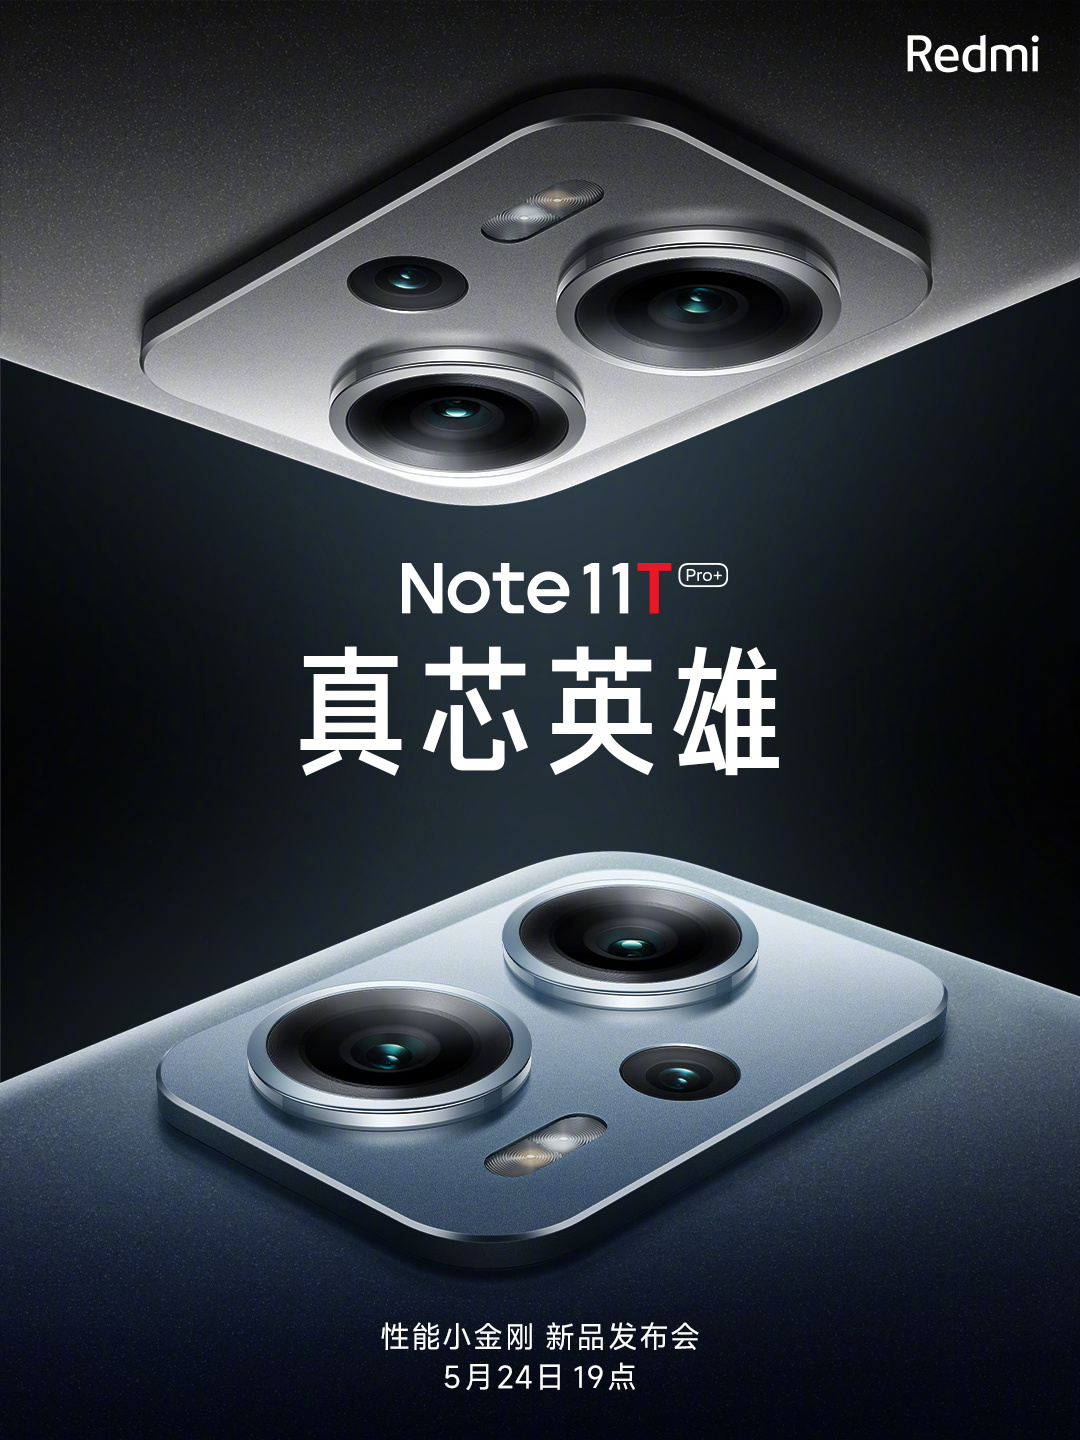 Xiaomi reveals the release date of the Redmi Note 11T series